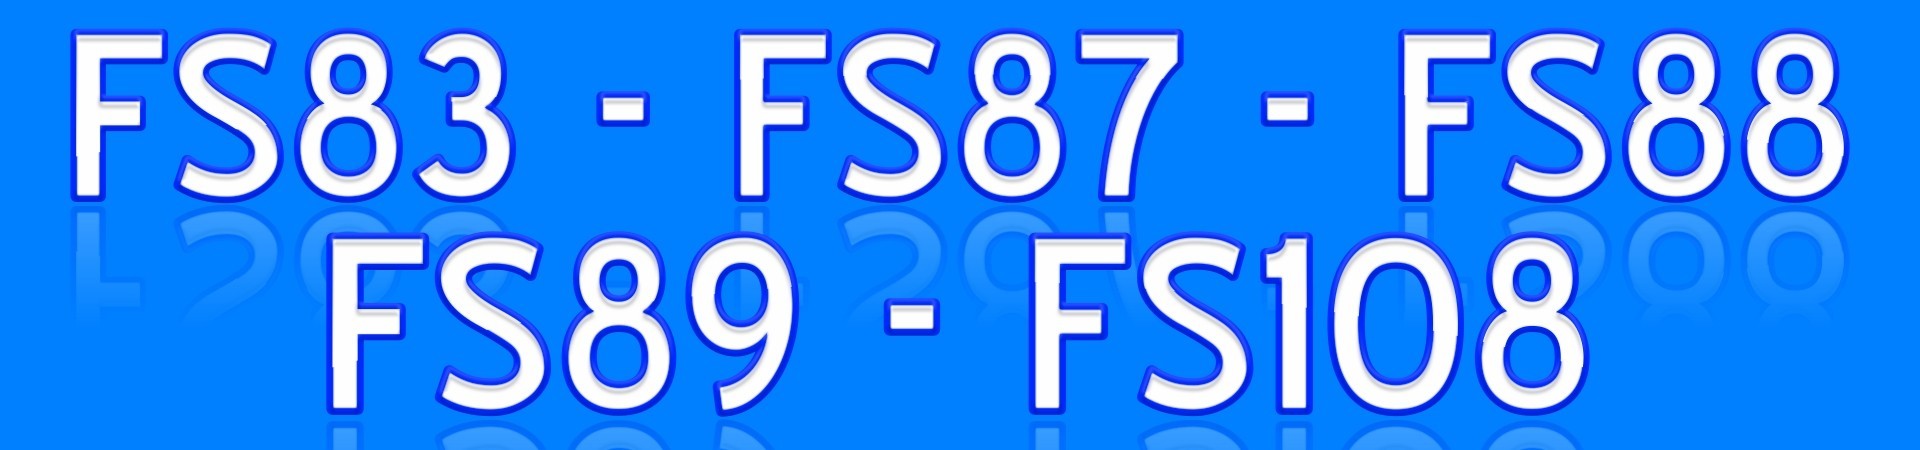 FS83 FS87 FS88 FS89 FS108